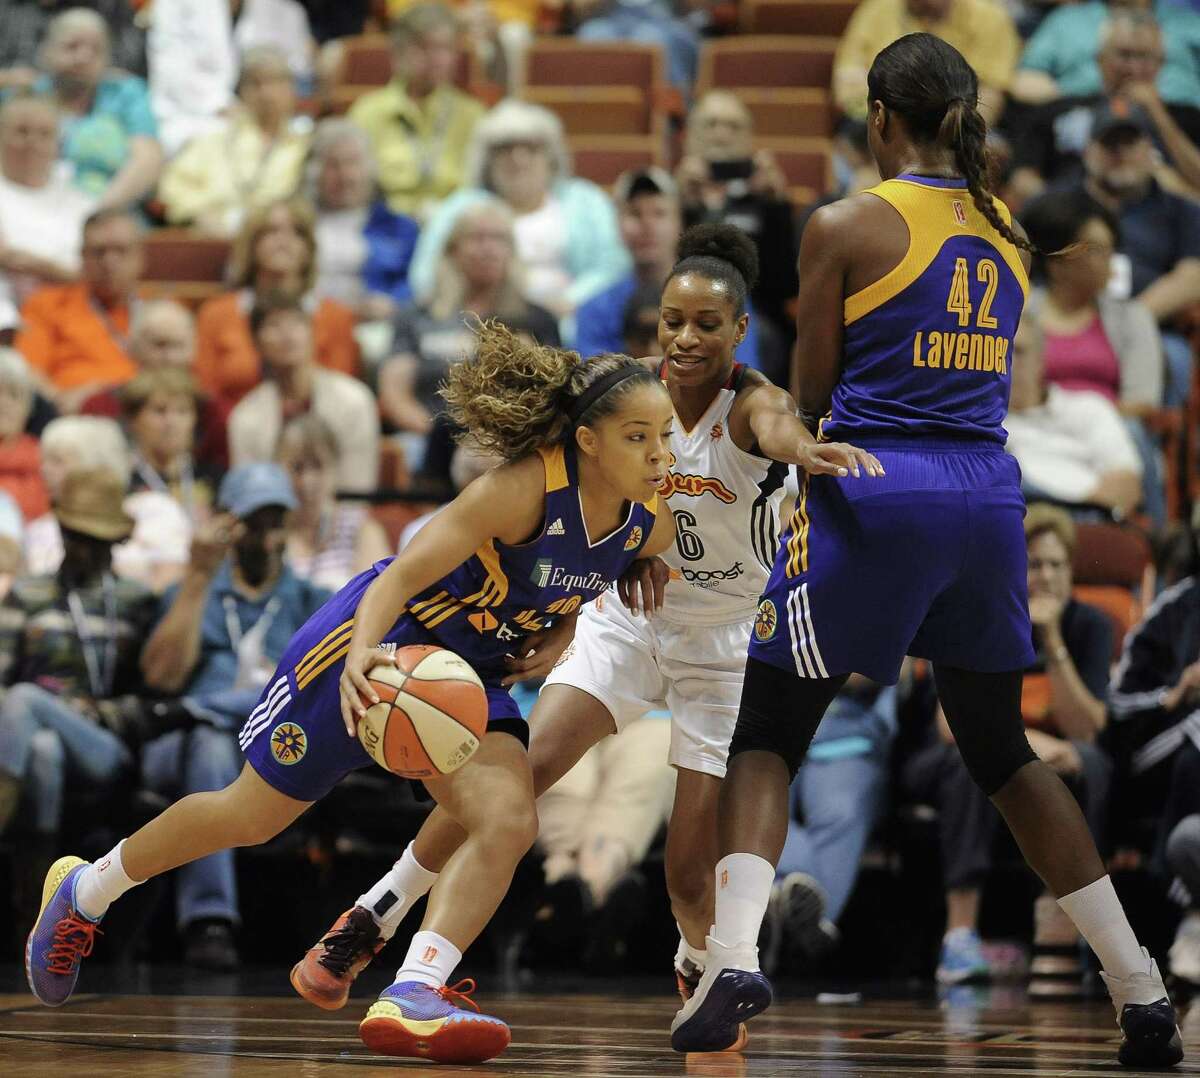 Los Angeles Sparksí Jasmine Lister, left, dribbles around Connecticut Sunís Jasmine Thomas, center, as Sparksí Jantel Lavender sets a pick during the first half of a WNBA basketball game, Friday, June 26, 2015, in Uncasville, Conn. (AP Photo/Jessica Hill)